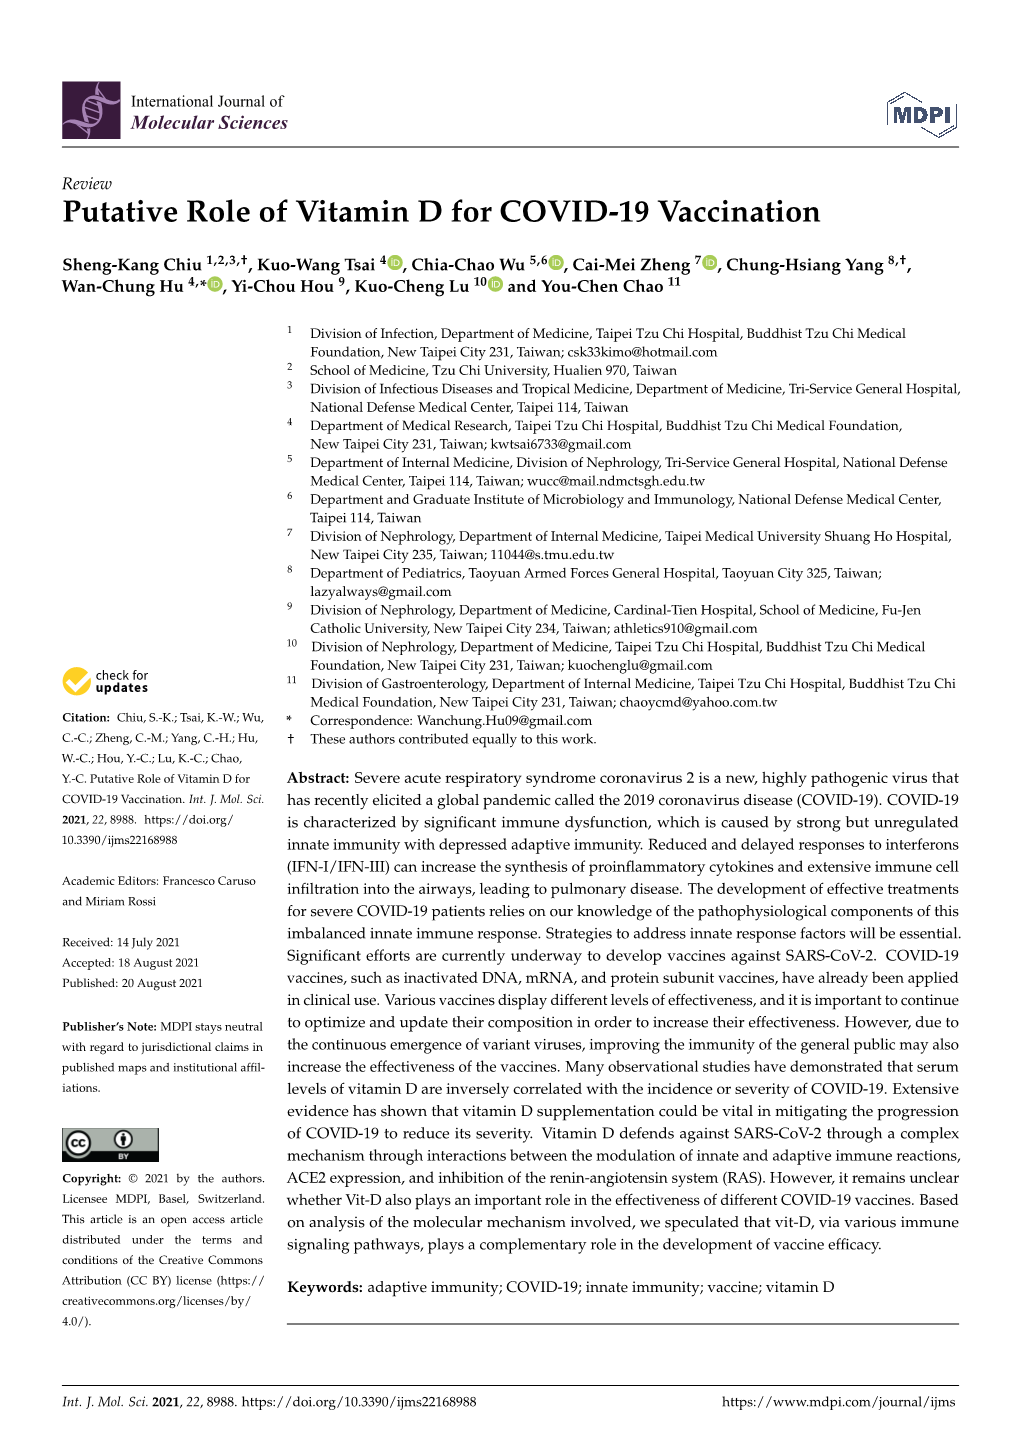 Putative Role of Vitamin D for COVID-19 Vaccination